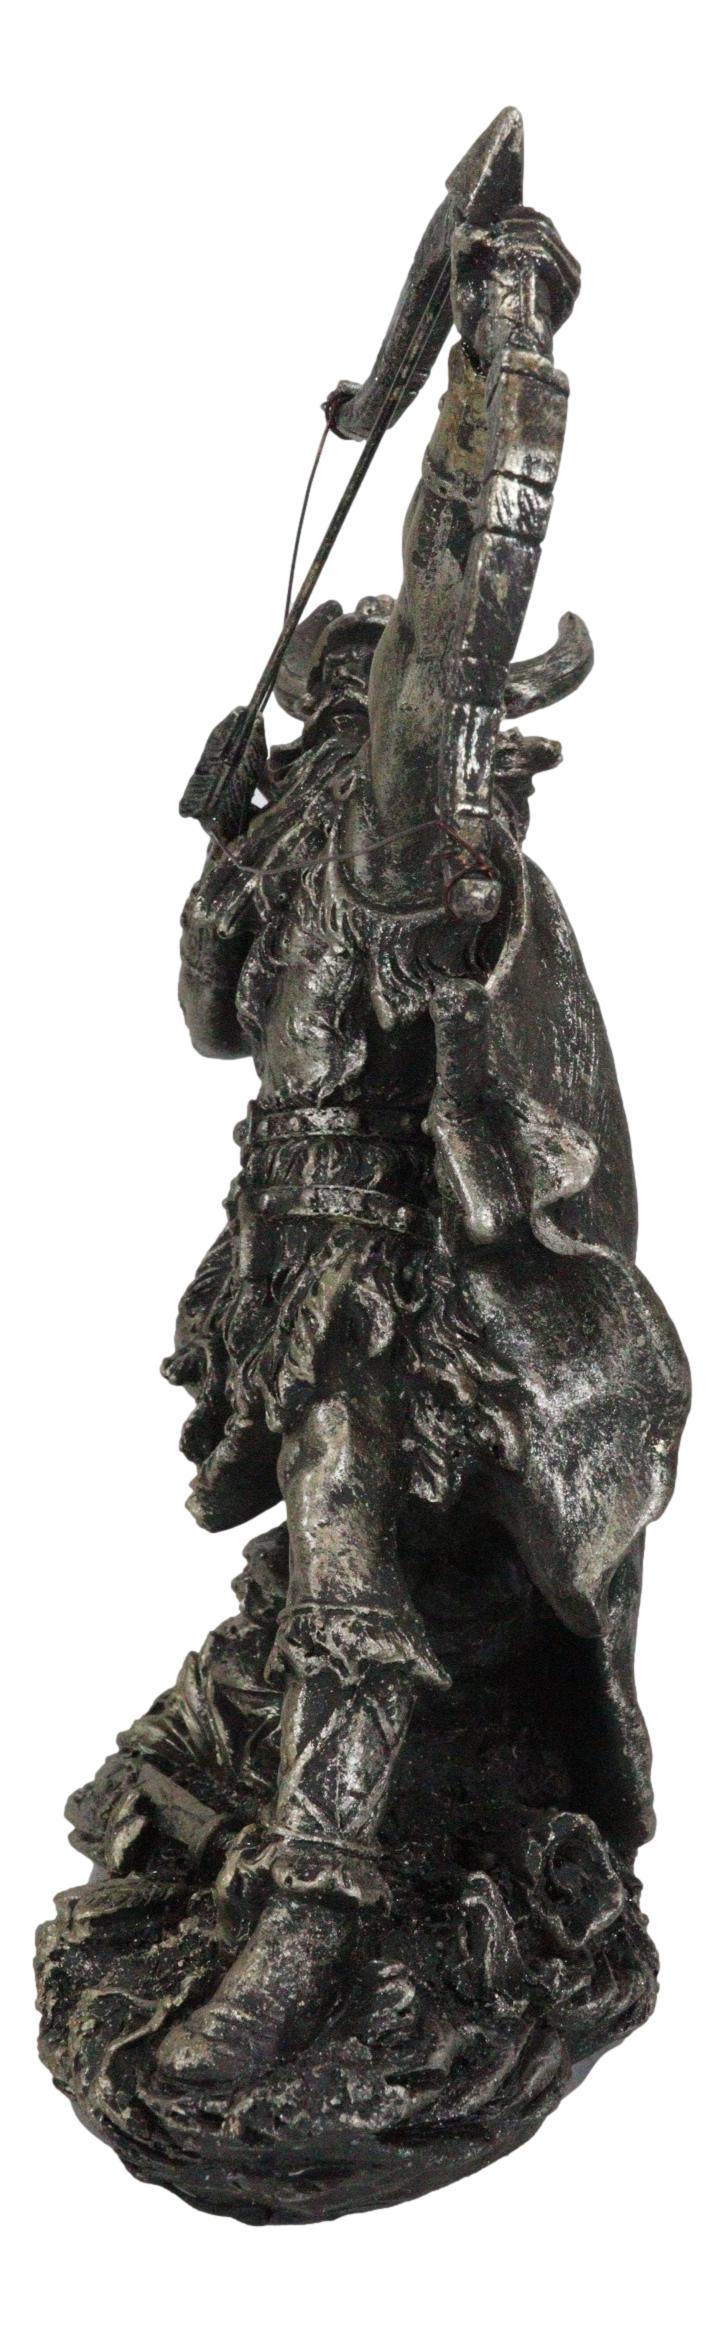 Viking Berserker Warrior With Bull Horn Helmet Shooting Arrow With Bow Figurine